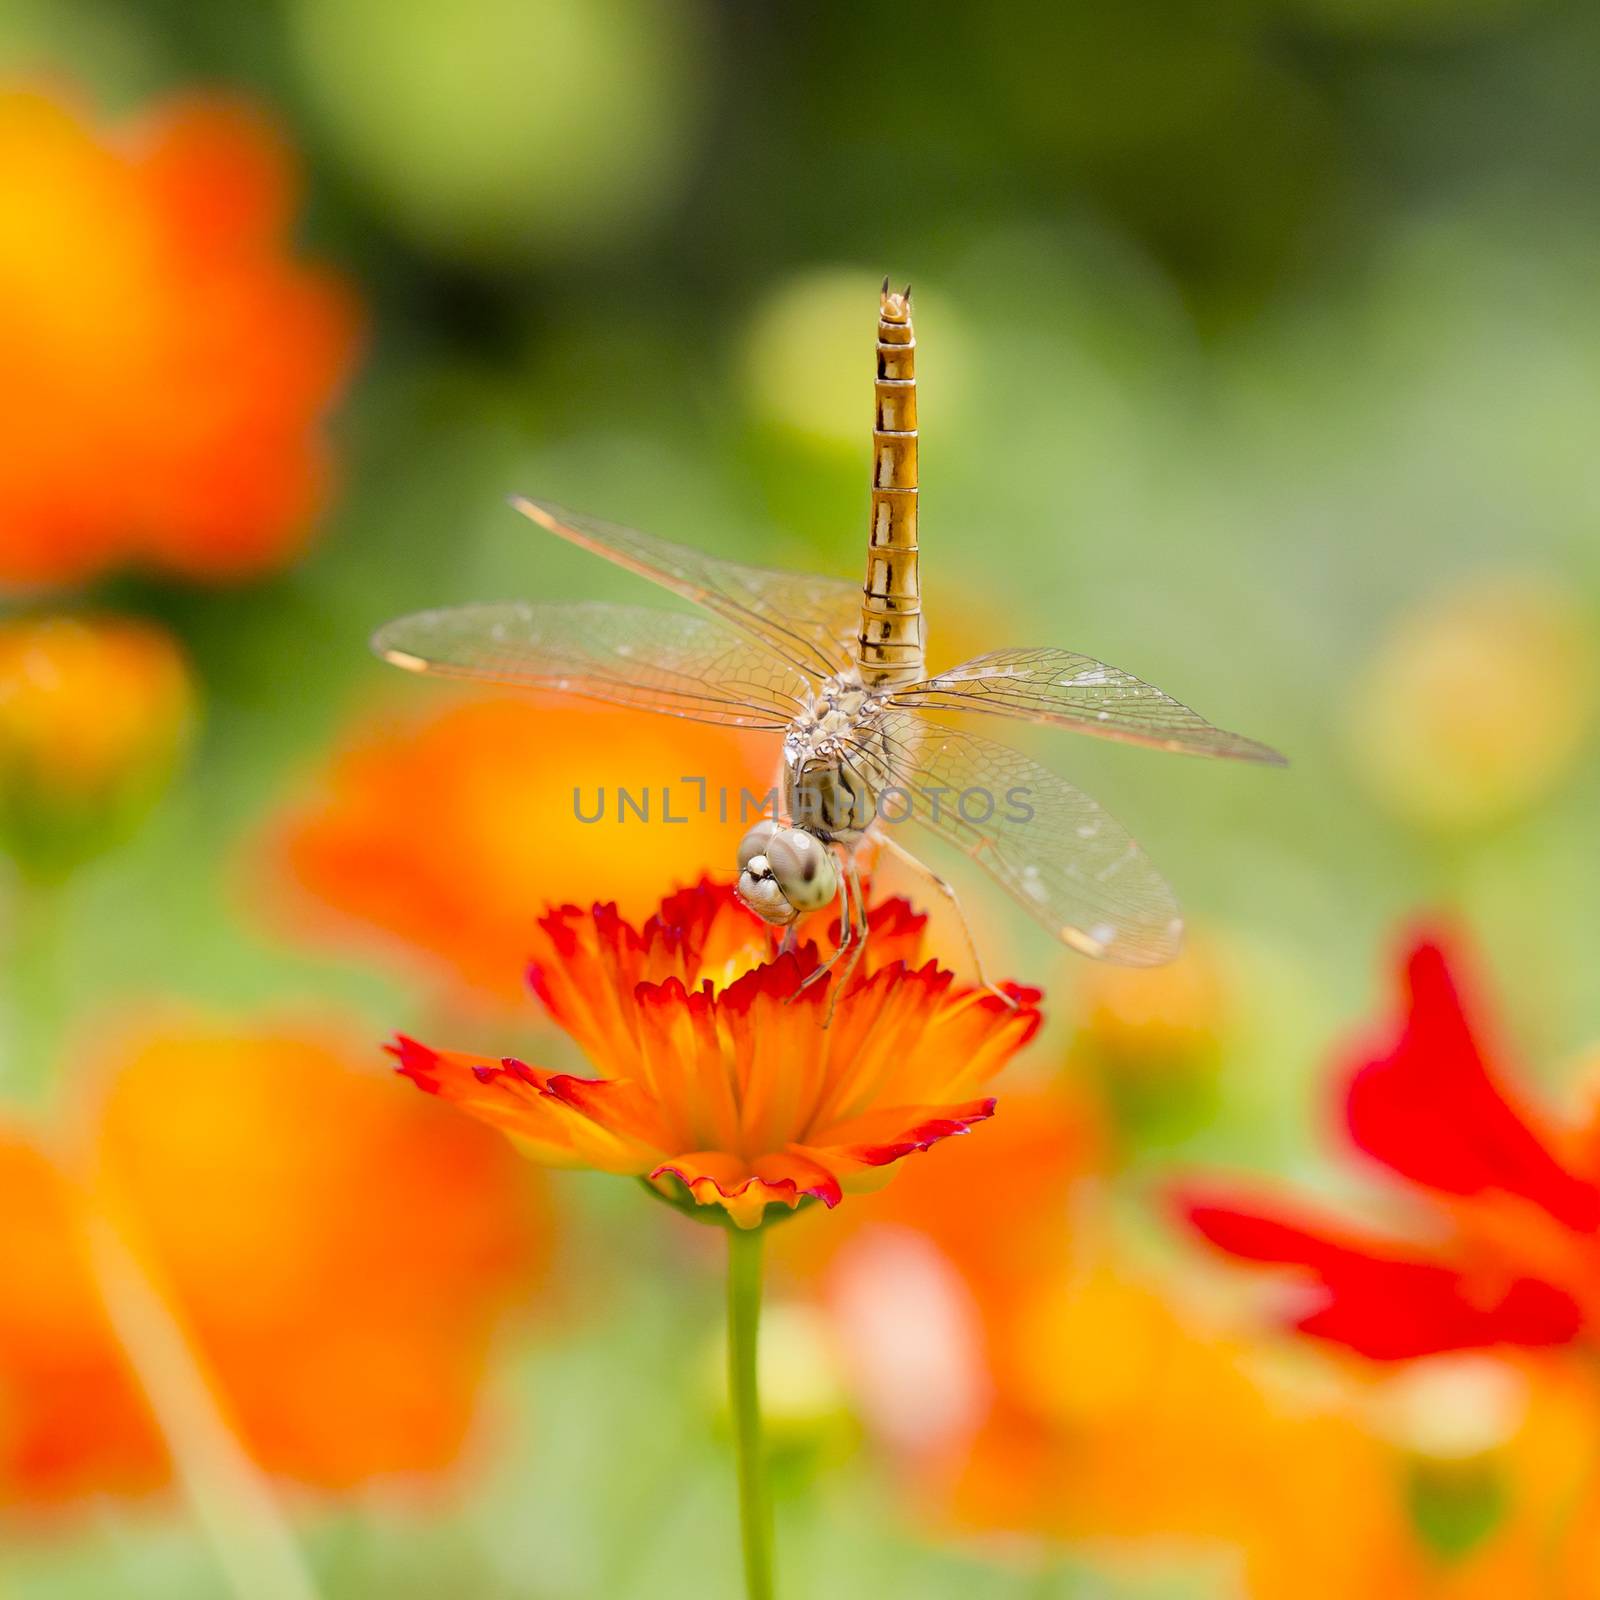 Dragonfly on orange flower with orange flowers background